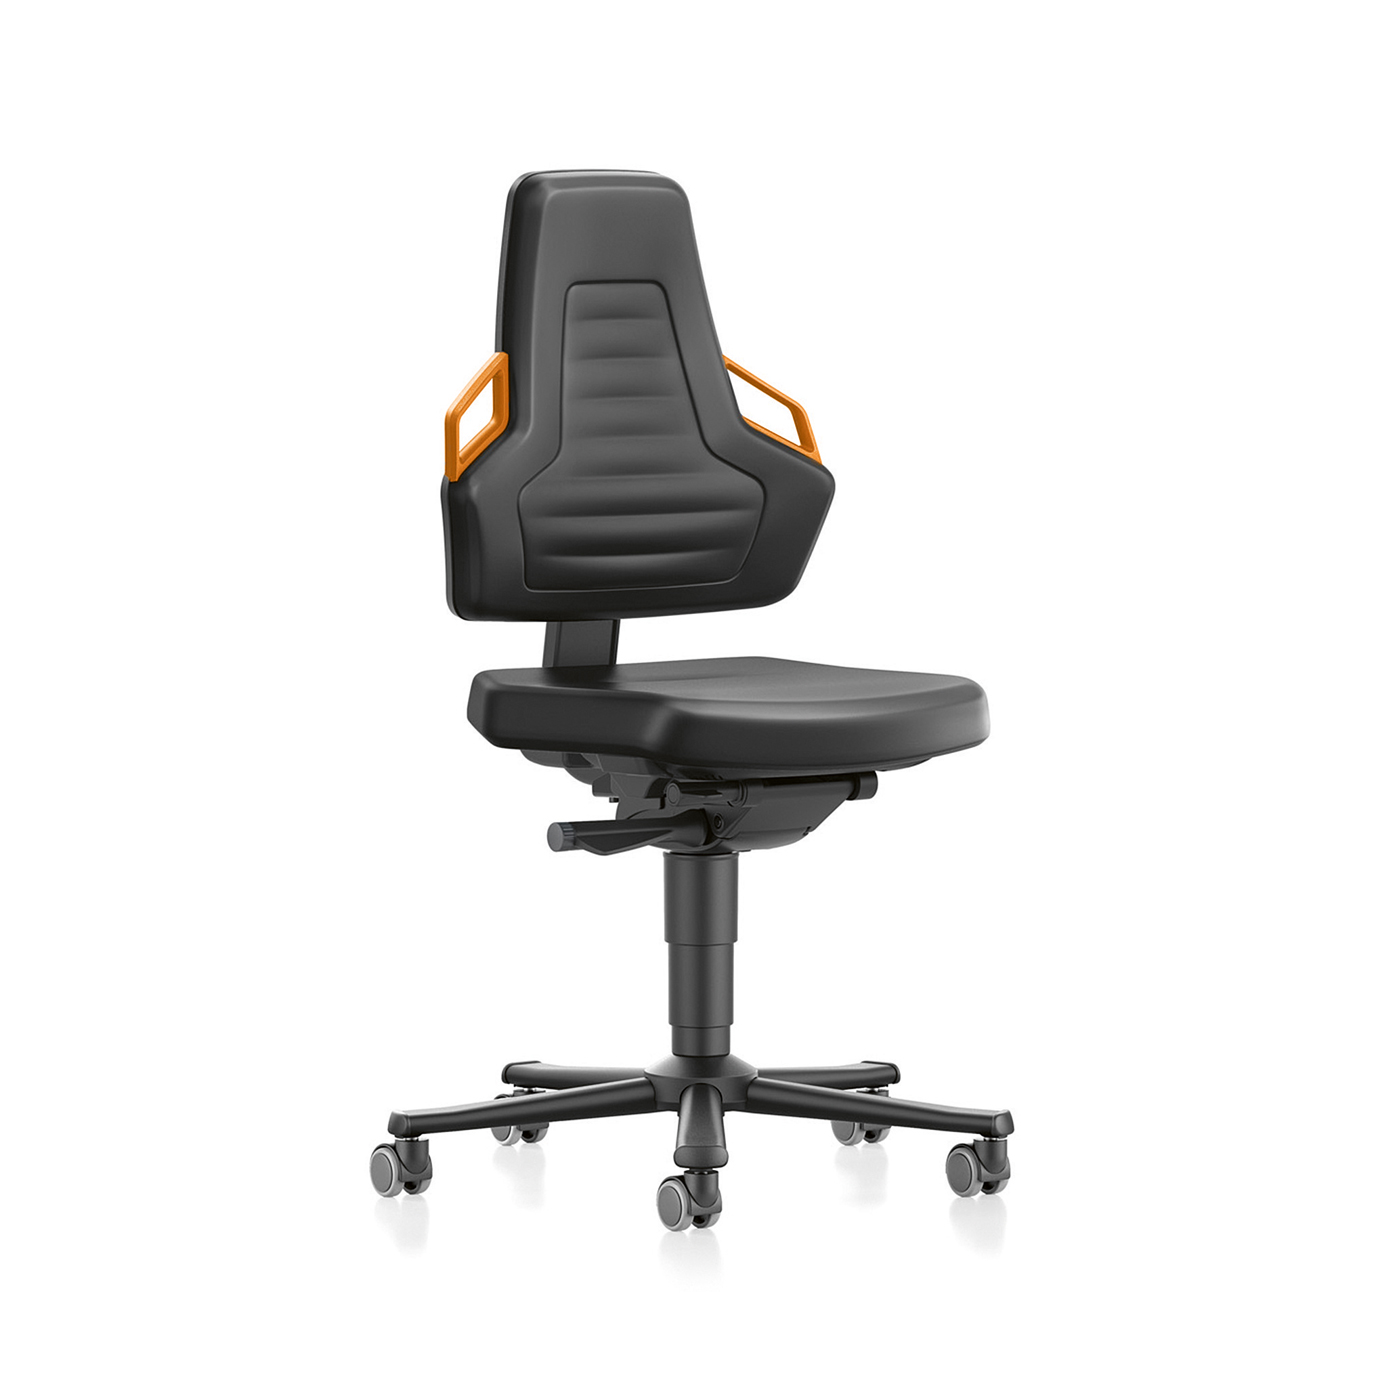 Nexxit Swivel Chair, Artificial leather Black/Orange - 1 piece